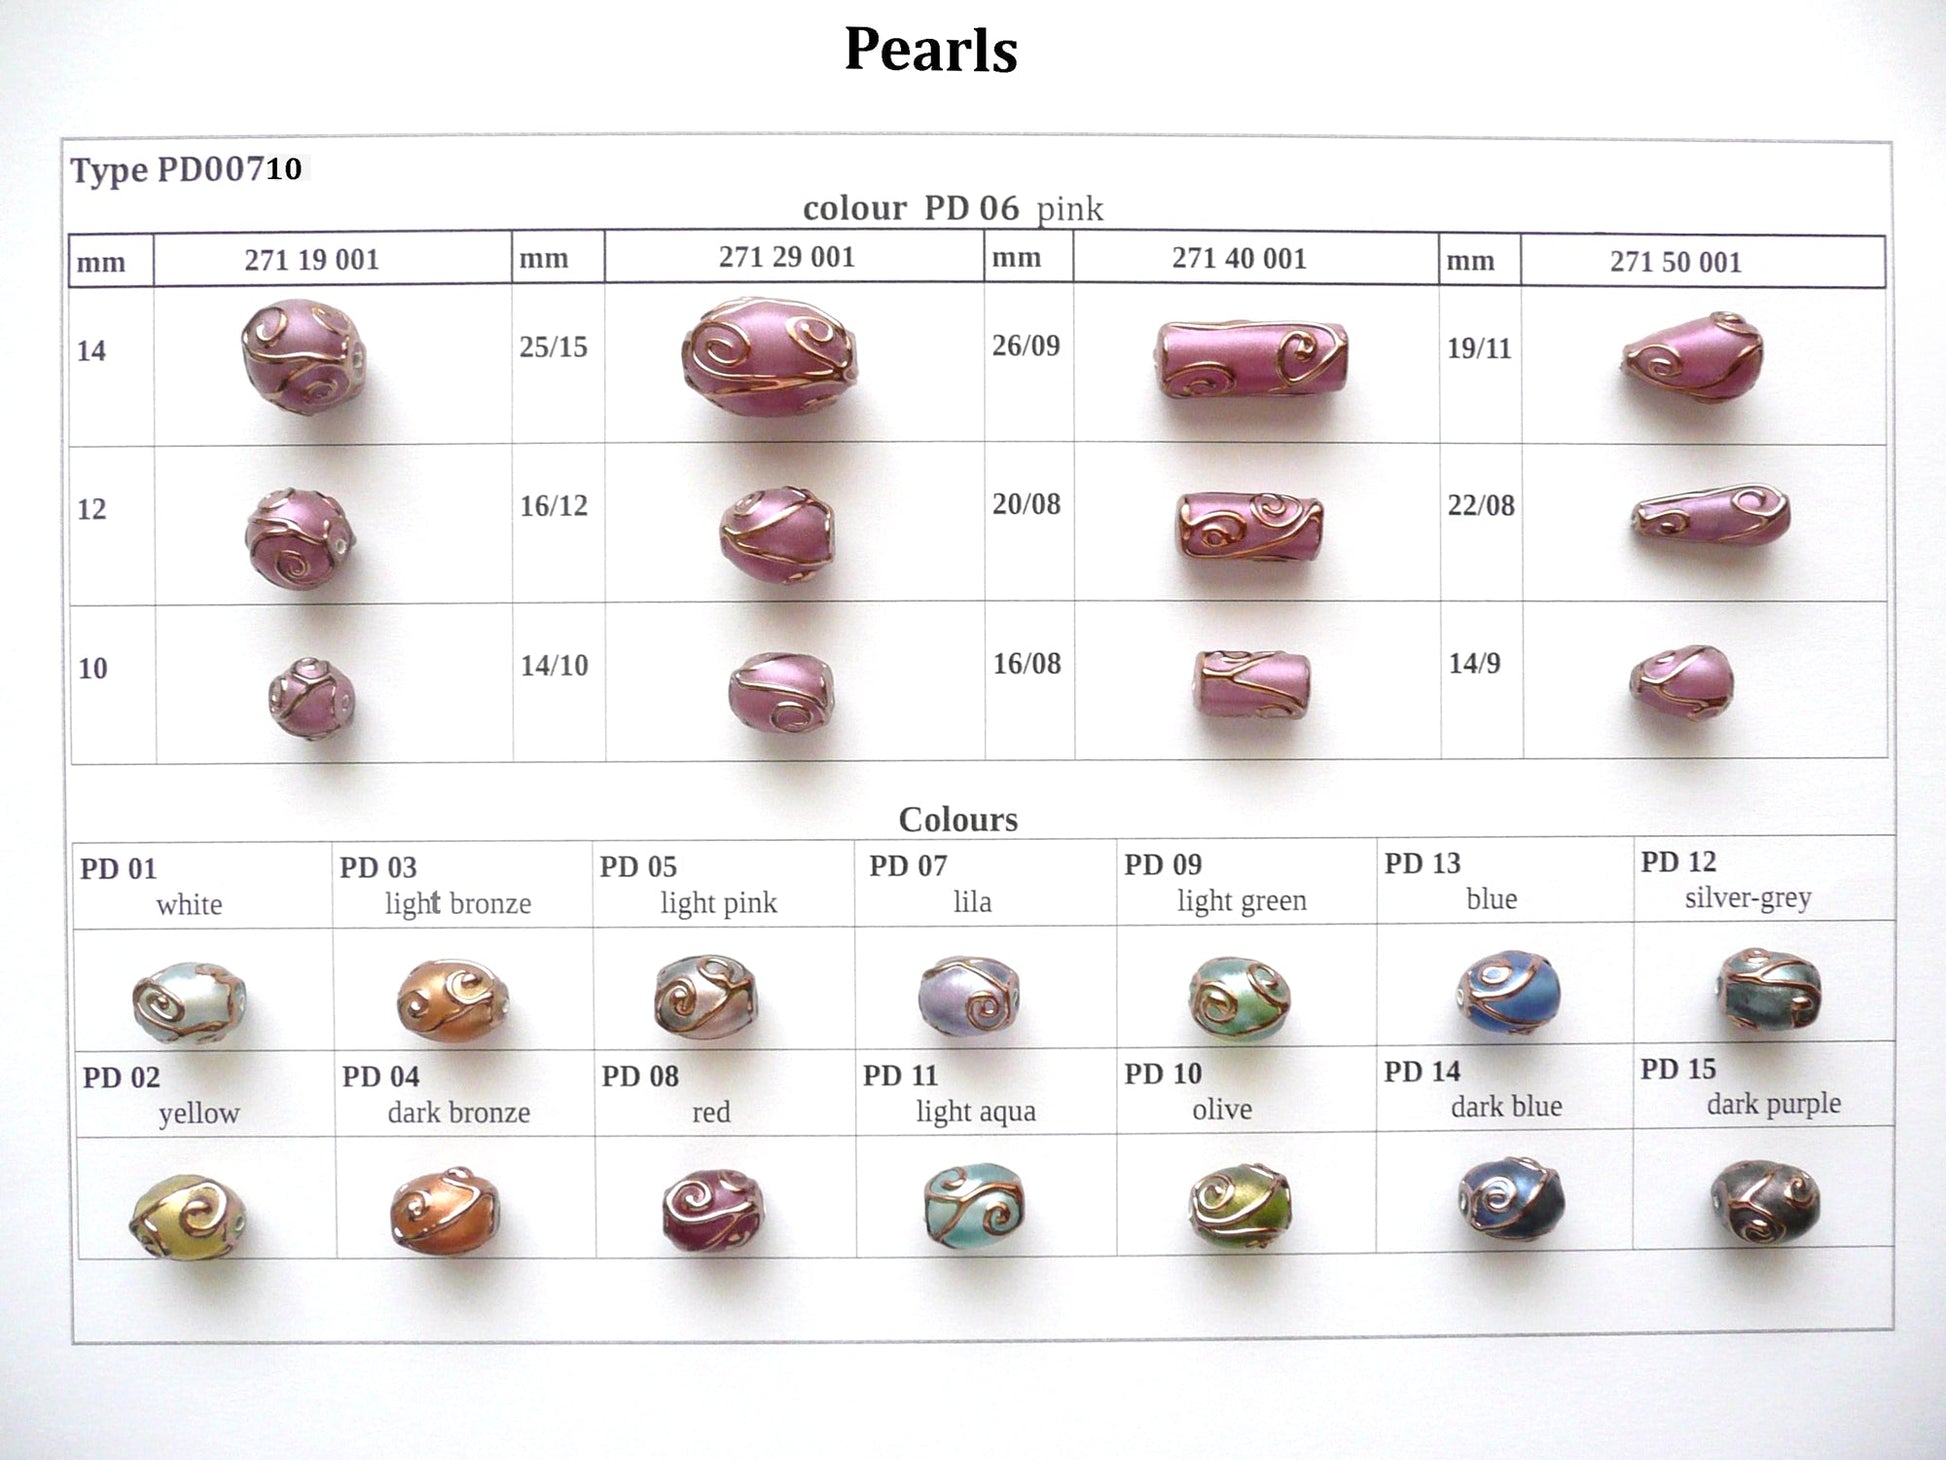 30 pcs Lampwork Beads Pearl Decor PD710 / Oval (271-29-001), Handmade, Preciosa Glass, Czech Republic